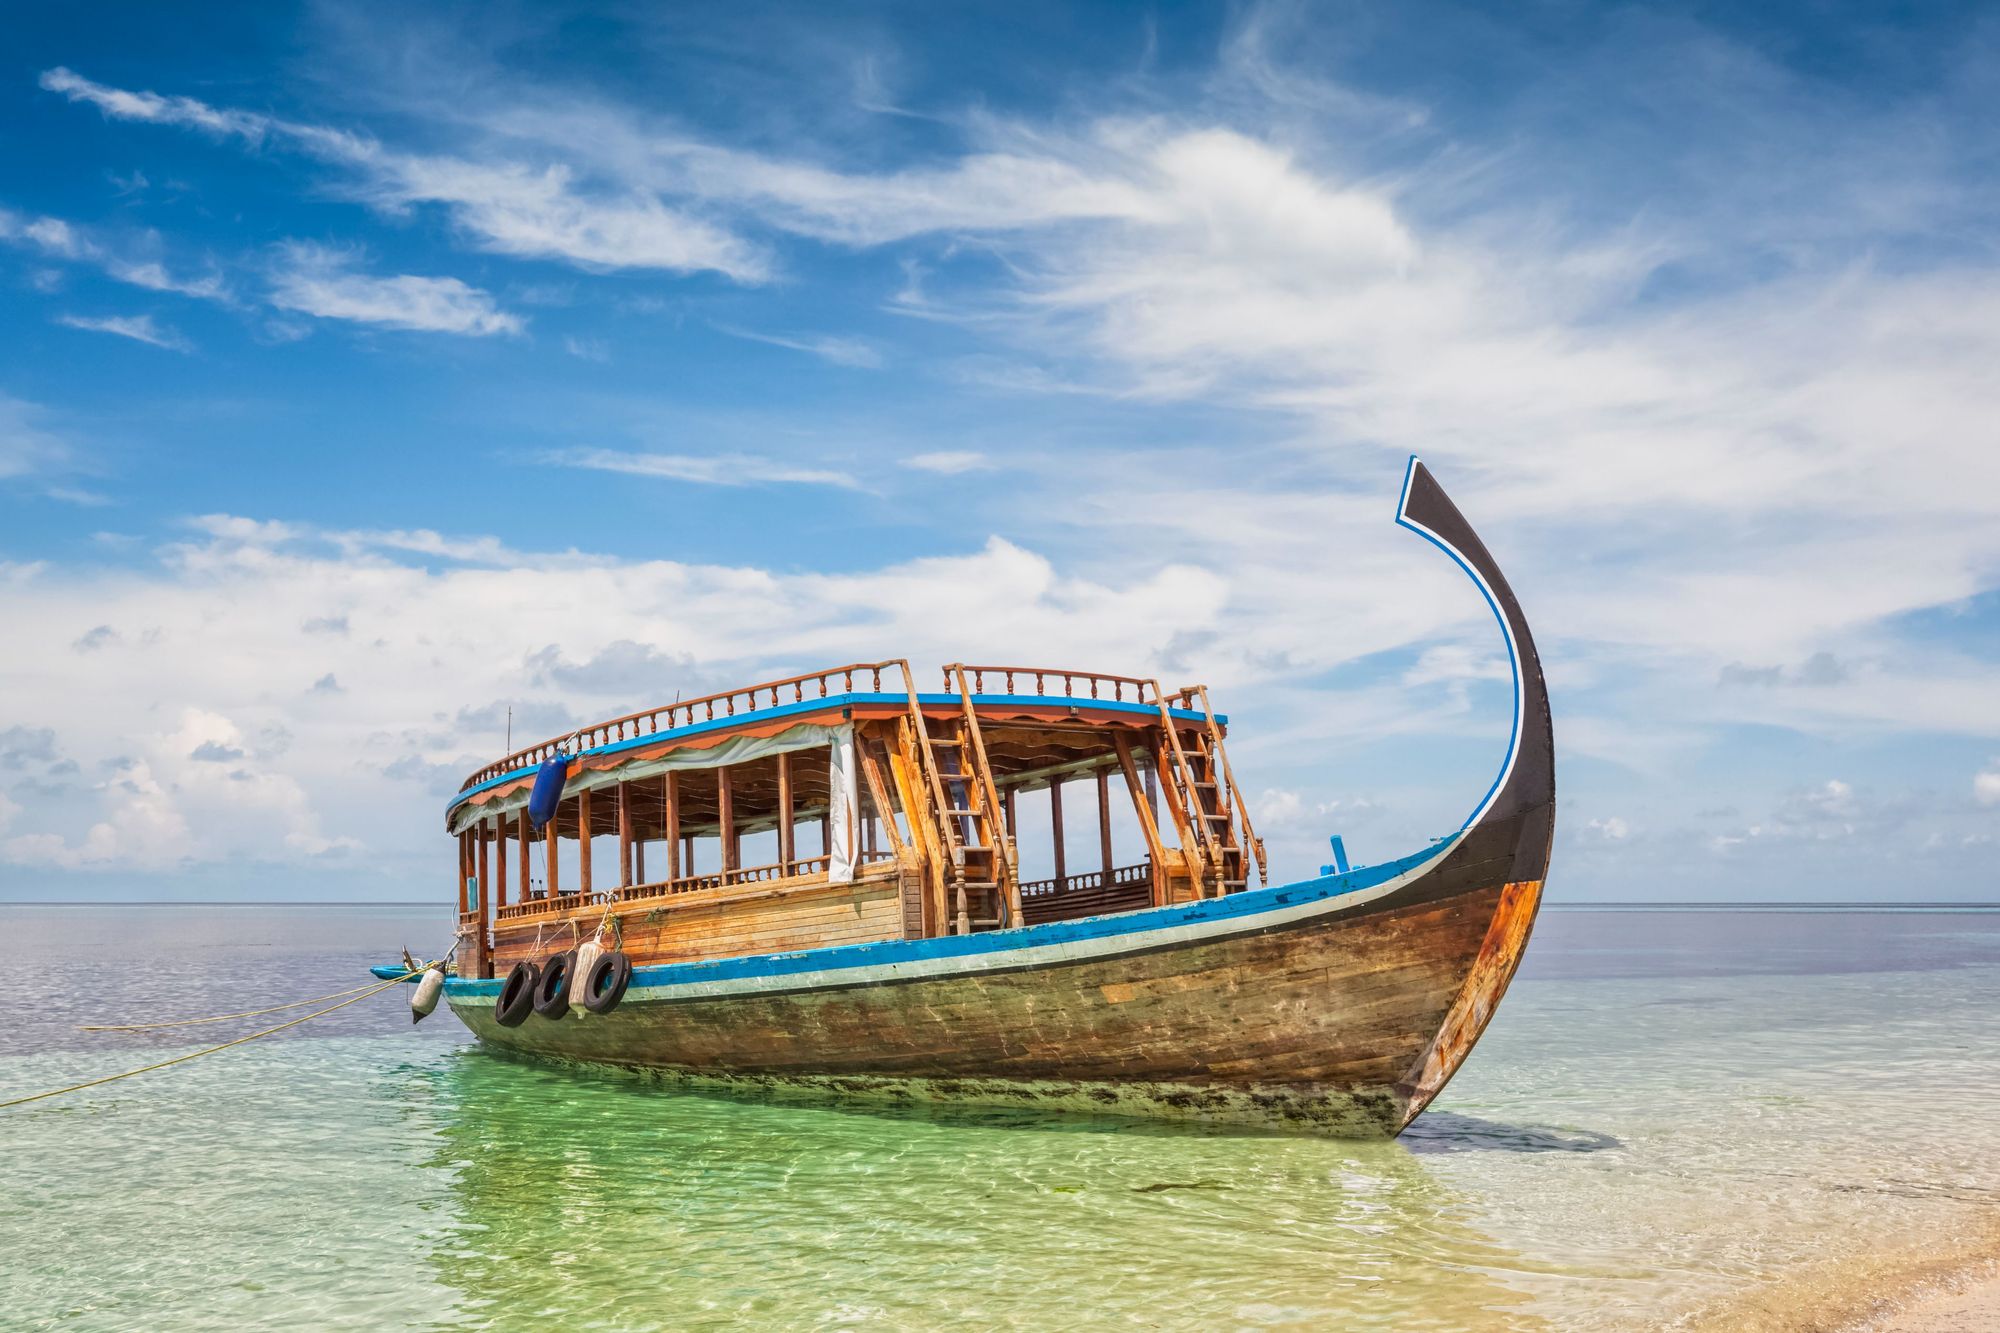 A traditional dhoni boat in the Maldives